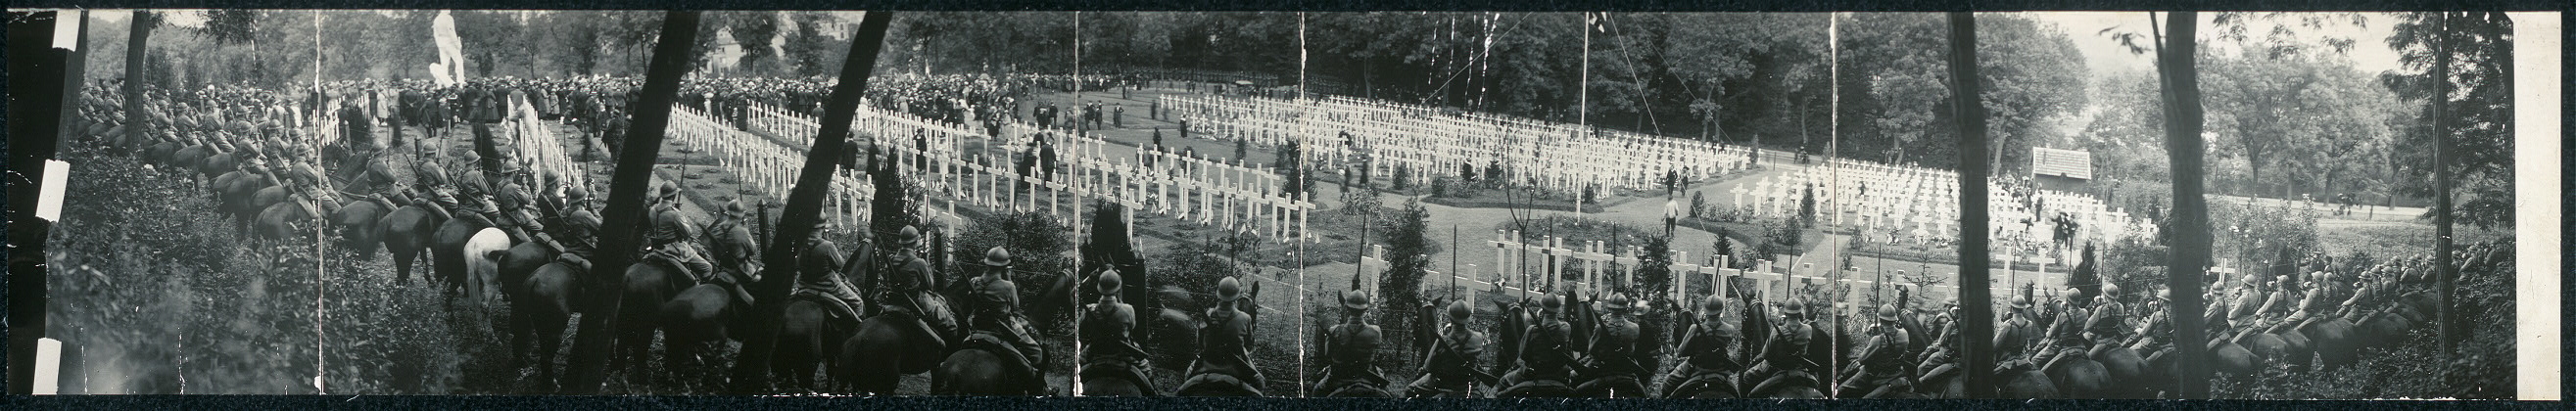 ceremonie-du-memorial-day-au-cimetiere-americain-de-suresnes-le-30-mai-1920-loc_3005524055_o.jpg